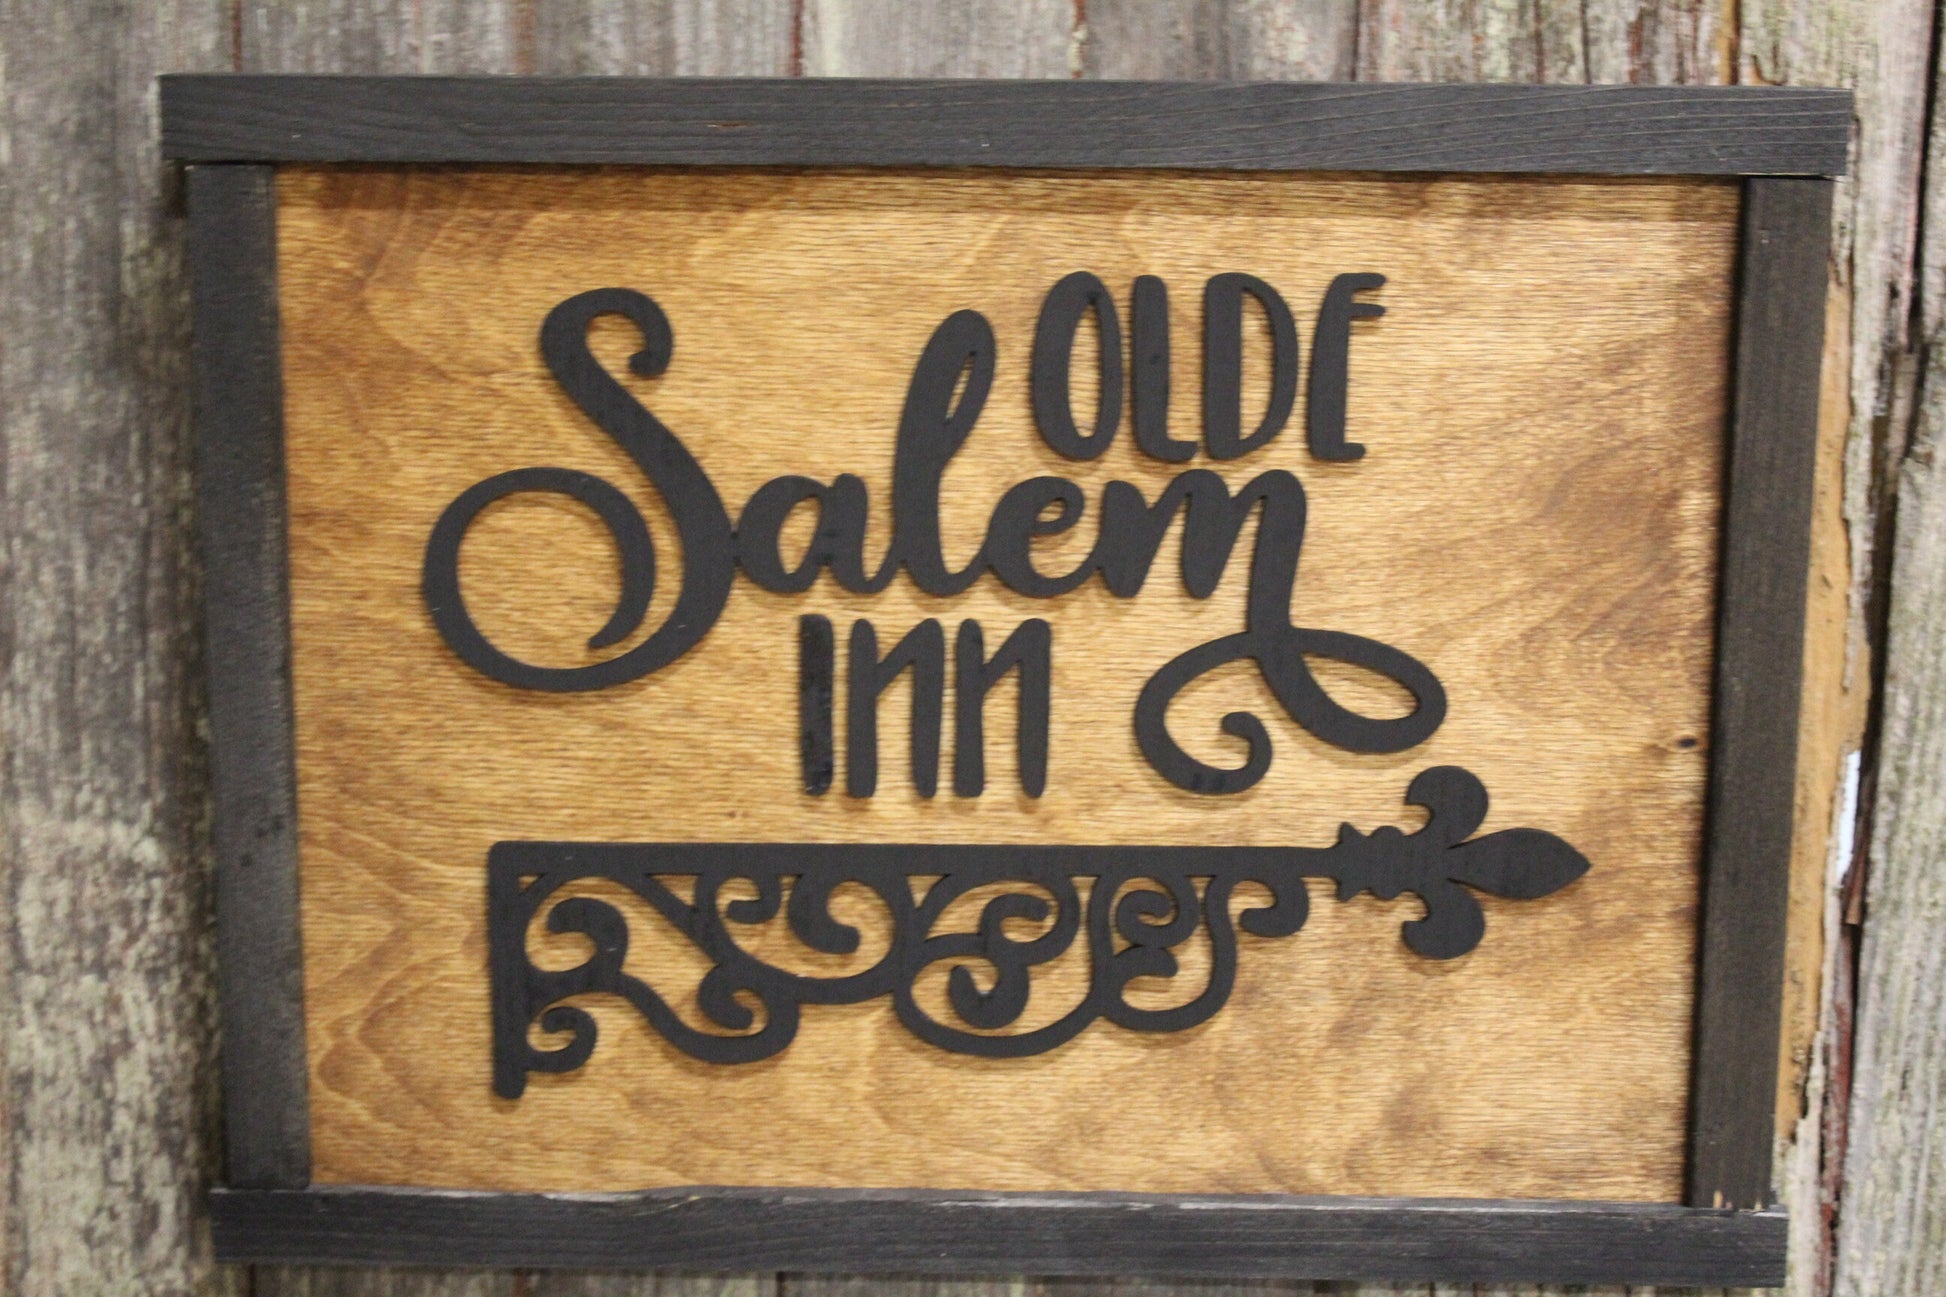 Olde Salem Inn Wood Sign Witch Hotel Motel BNB Halloween 3D Raised Text Country Farmhouse Cabin Decor Wall Decoration Halloween Creepy